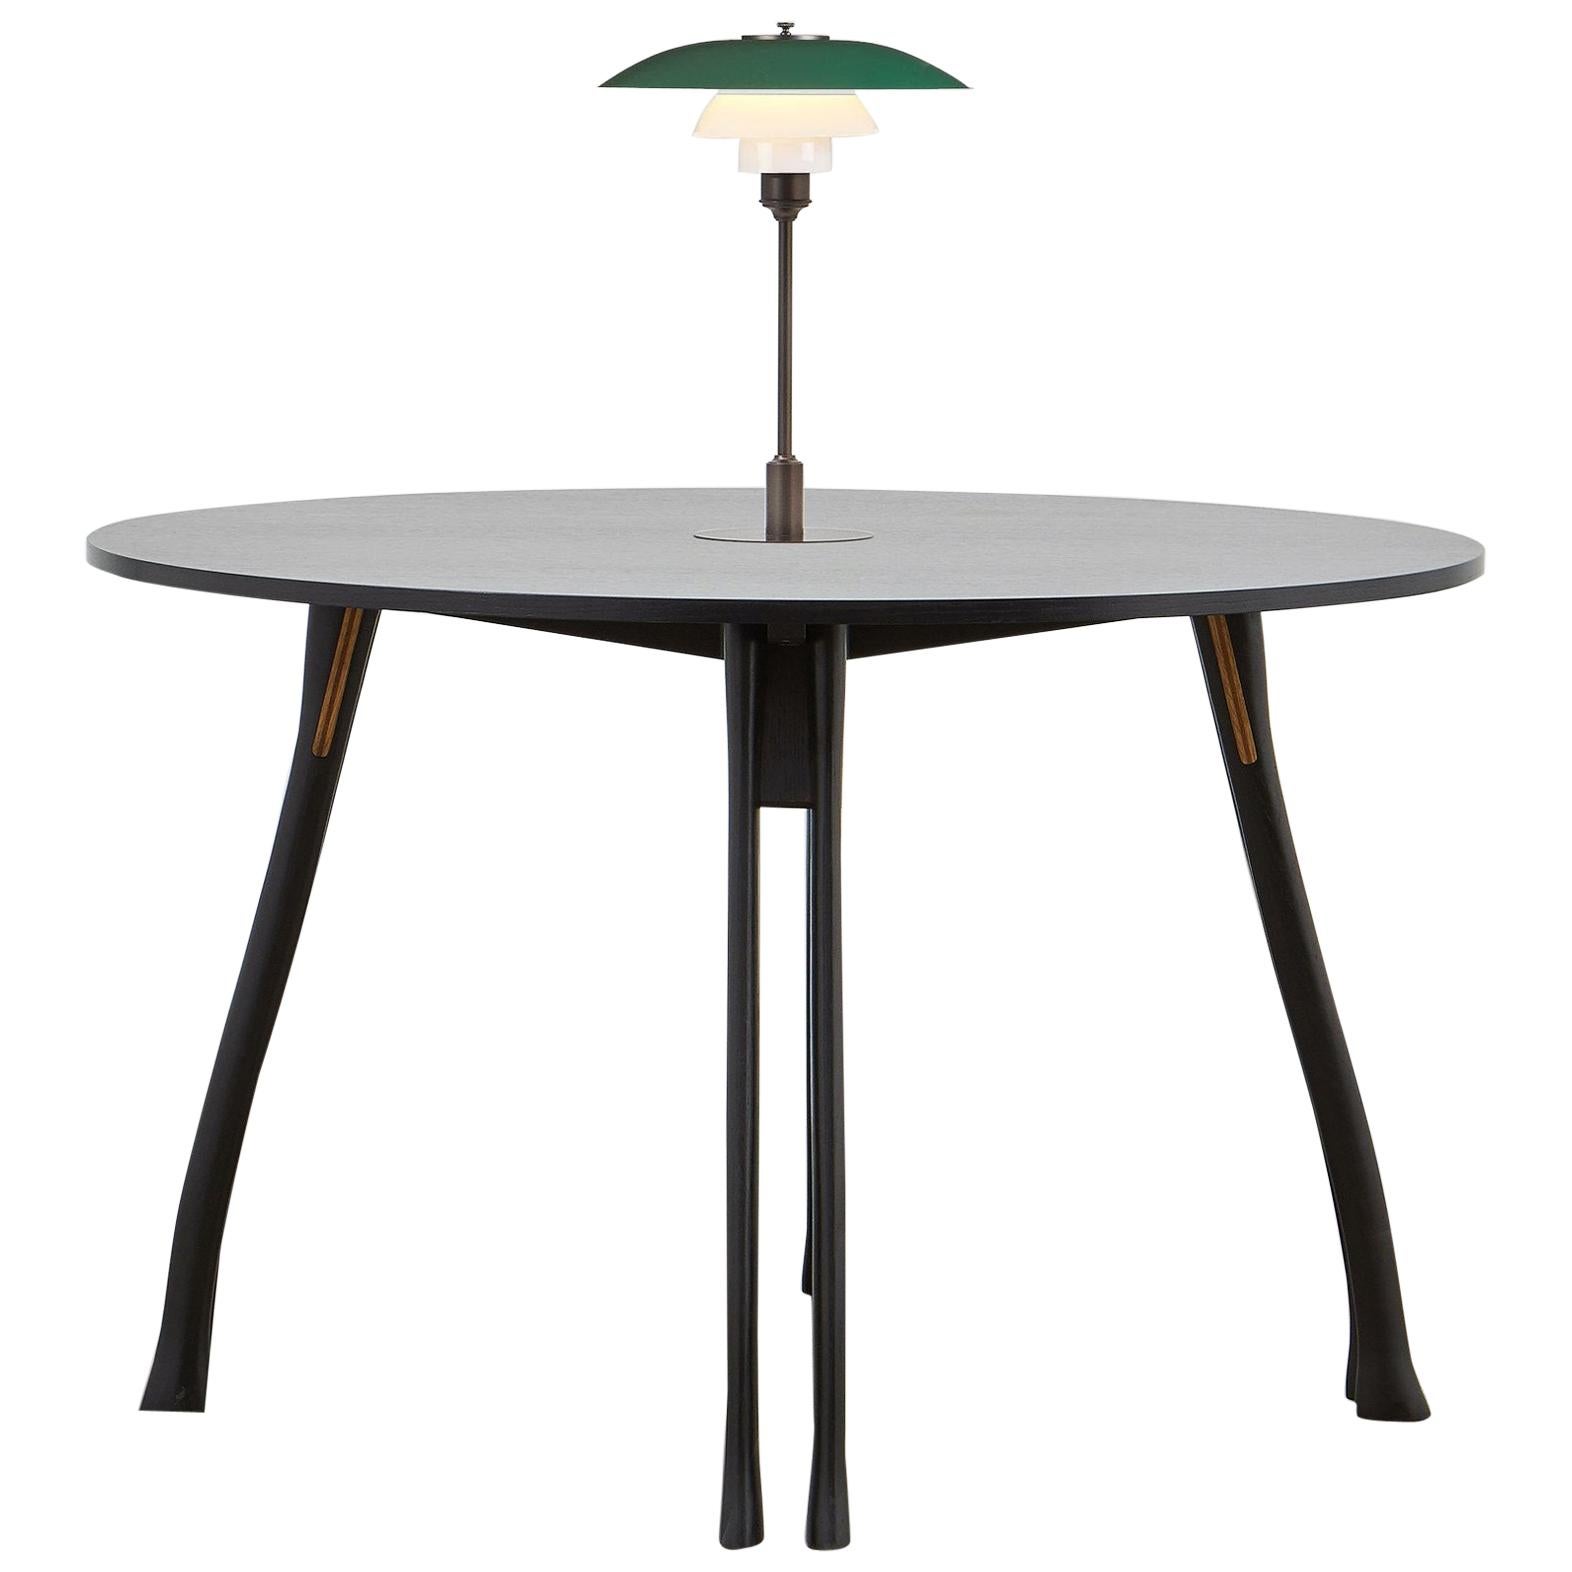 PH Axe Table, Black Oak Legs, Veneer Table Plate, Green PH Lamp